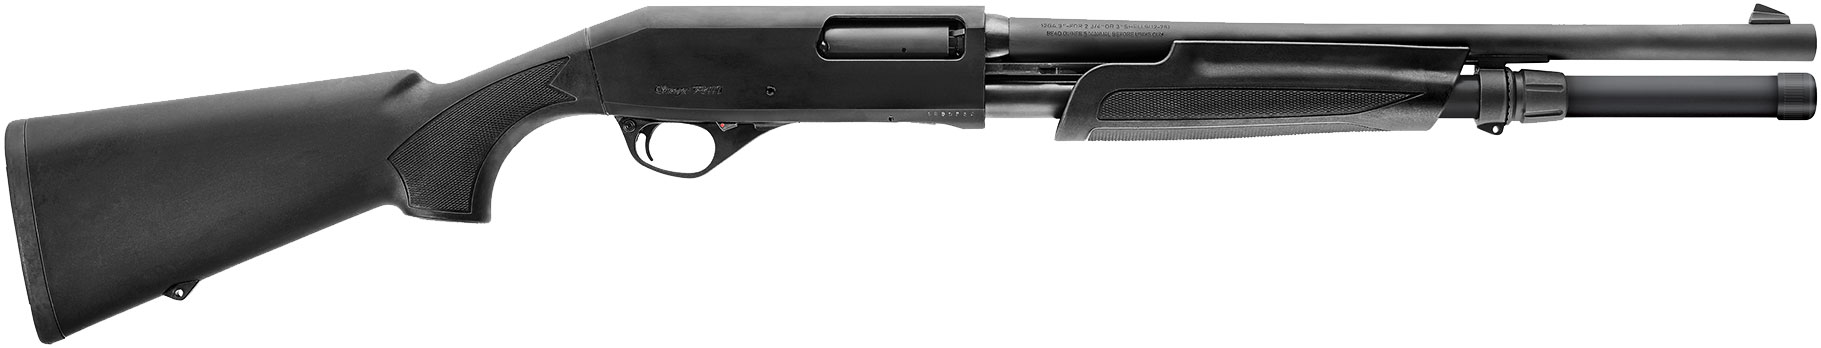 Stoeger P3000 Pump Shotgun 31892FS, 12 Gauge, 18.5", 3" Chmbr, Synthetic Stock, Black Finish